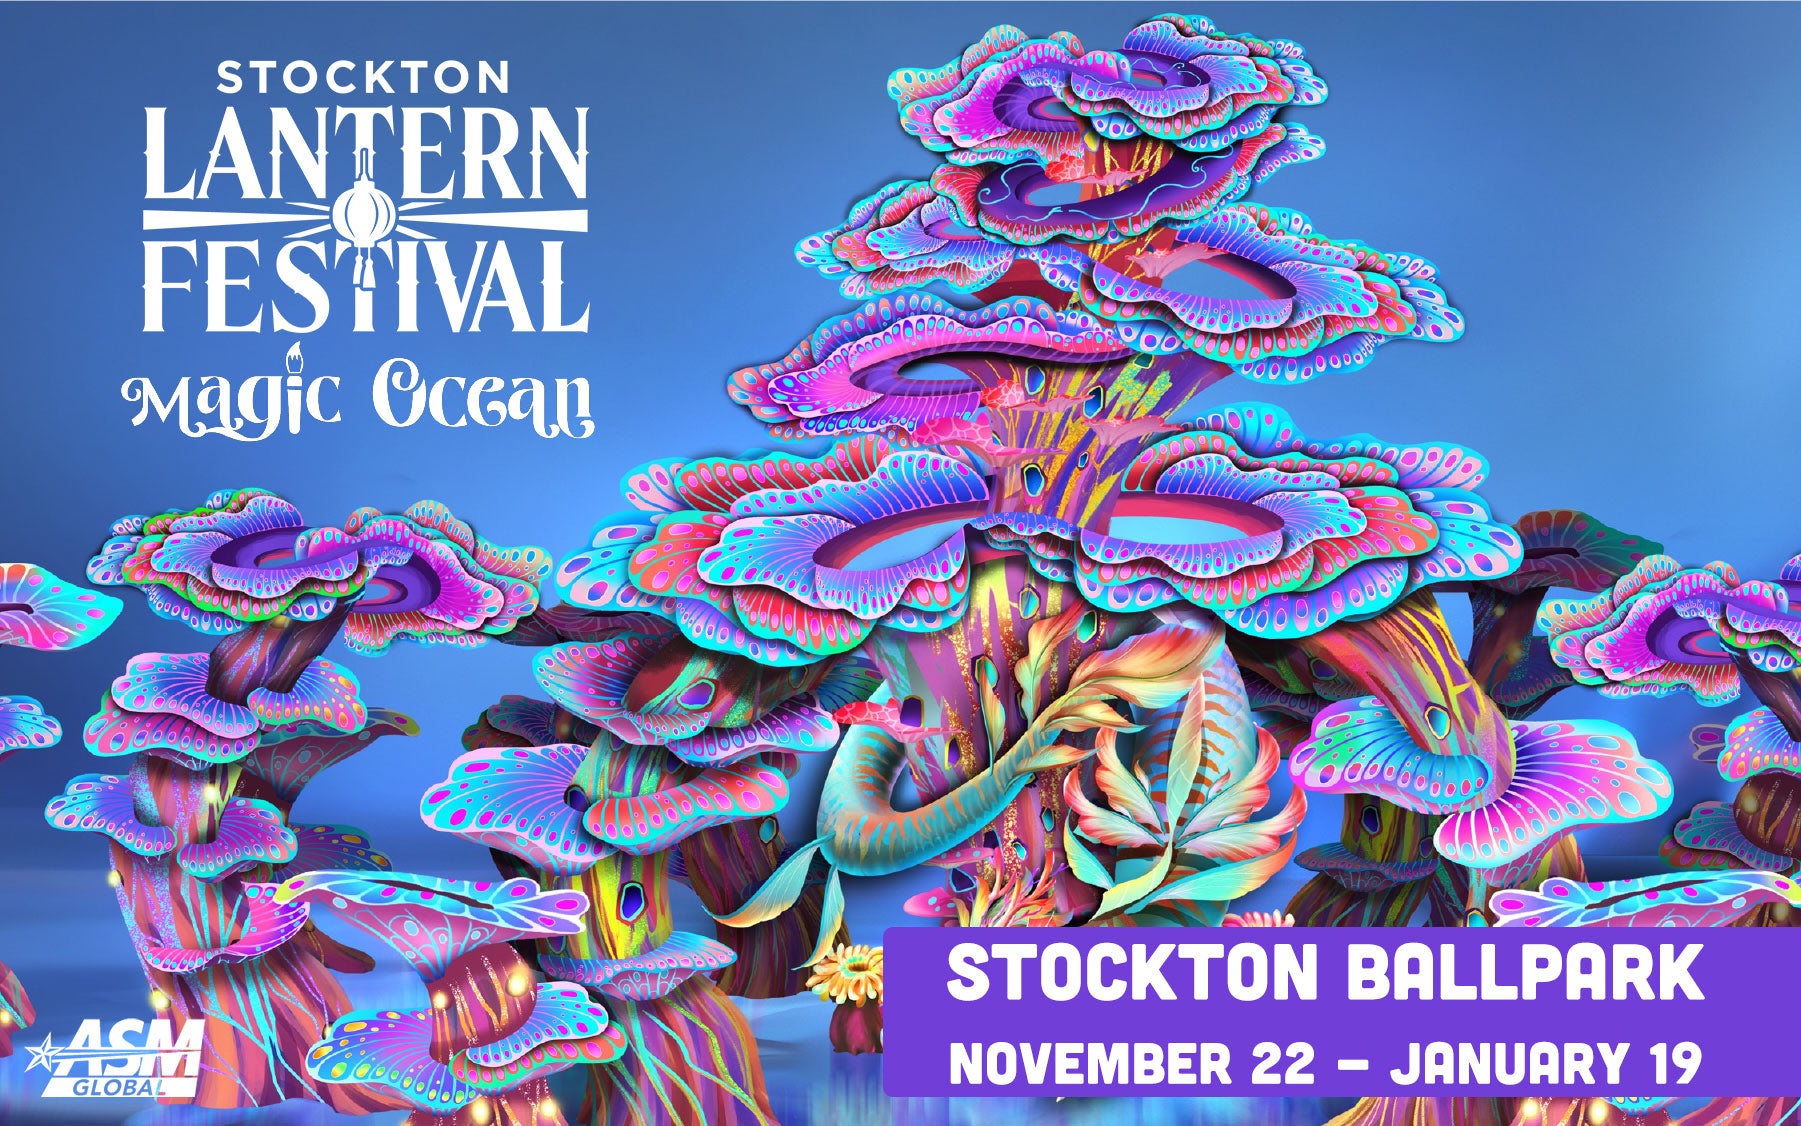 Stockton Lantern Festival